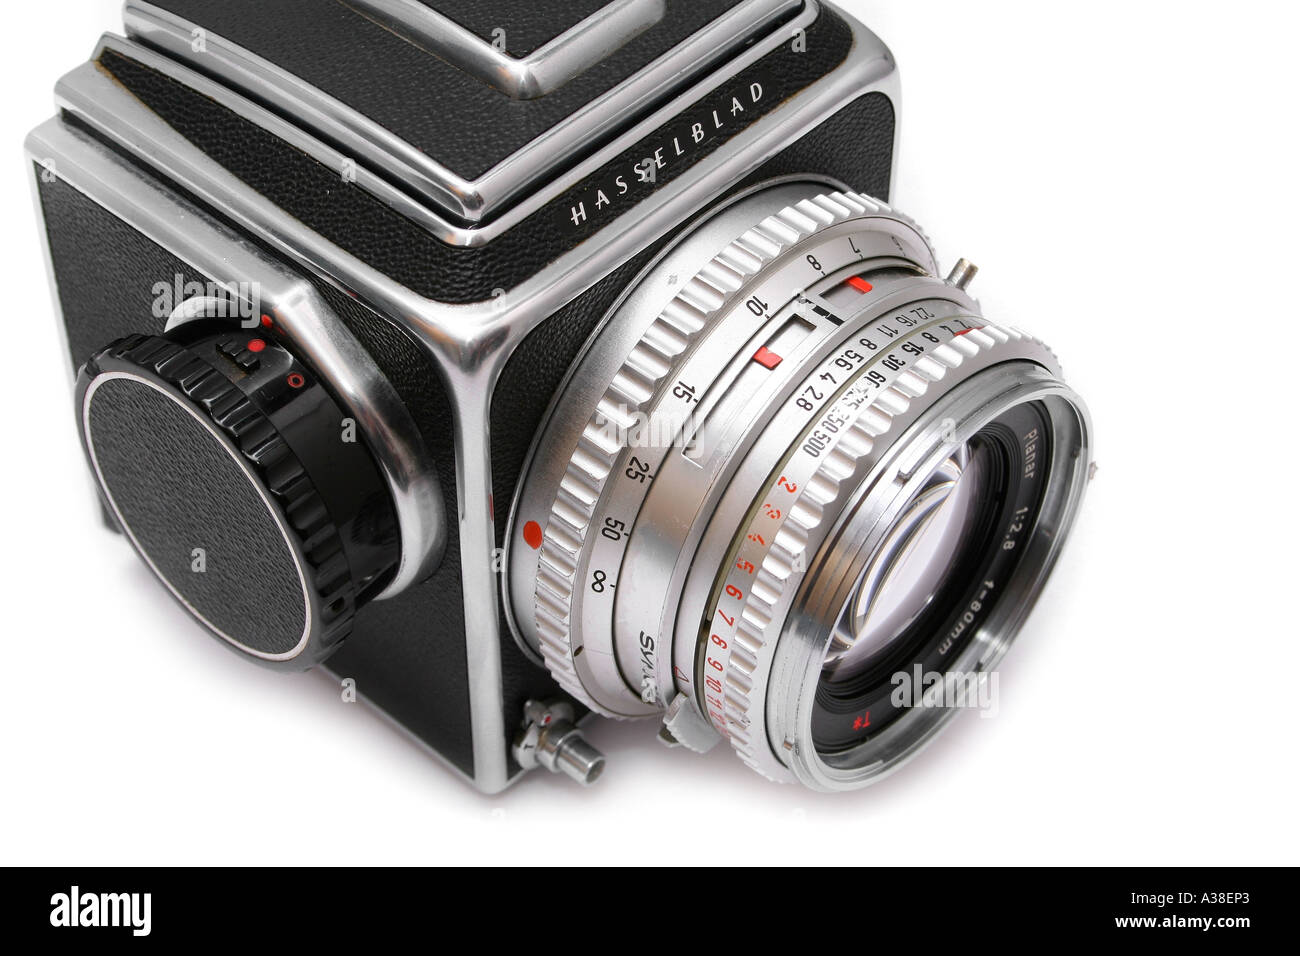 Hasselblad 500cm medium format single lens reflex camera 6x6 cm two and a quarter square Stock Photo